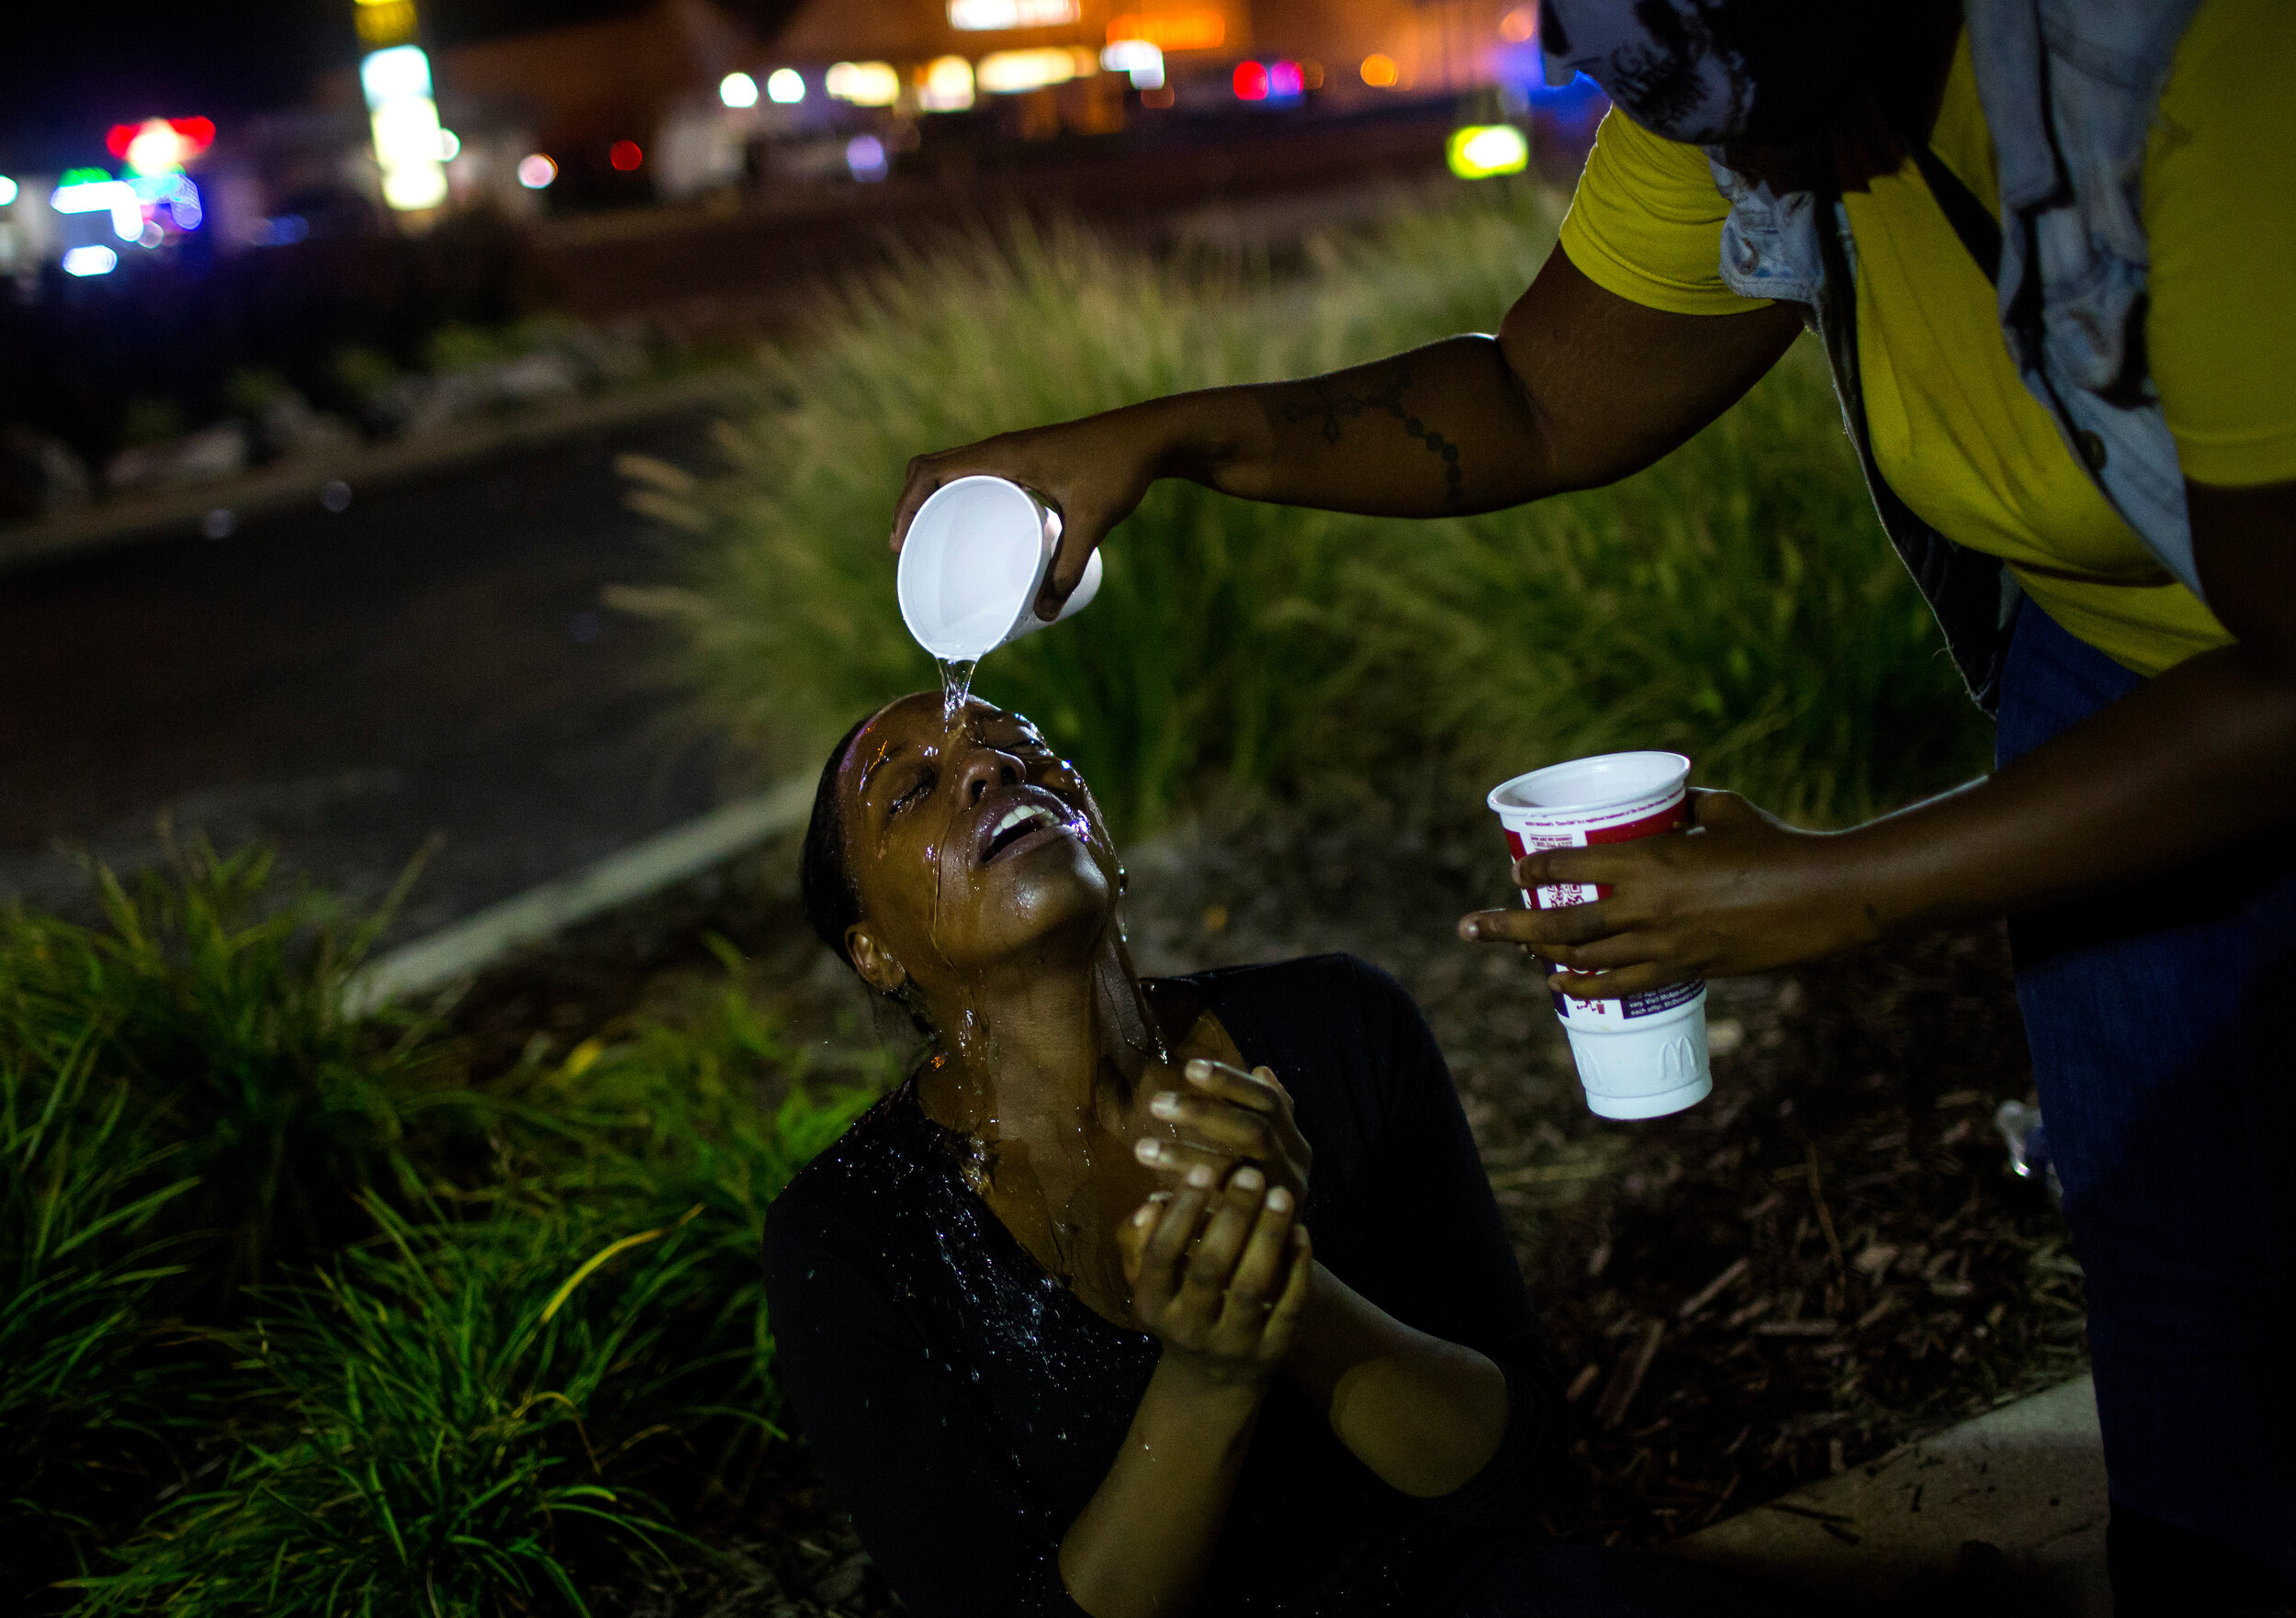   Civil unrest. Ferguson, MO. 2014  